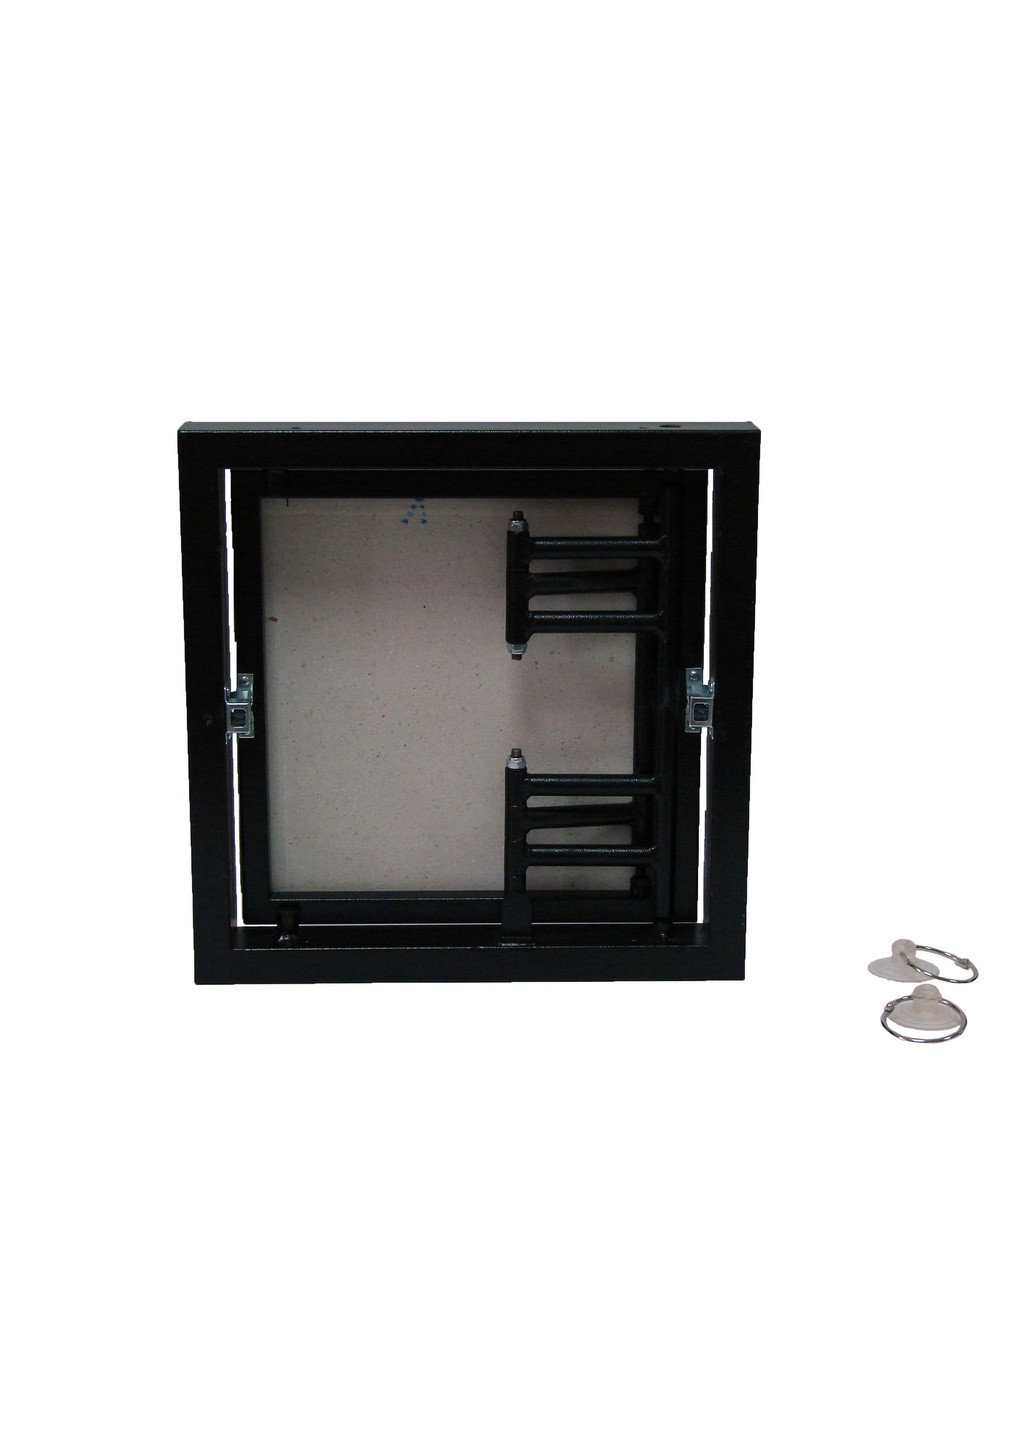 Ревизионный люк скрытого монтажа под плитку фронтальнораспашного типа 300x300 ревизионная дверца для плитки (1202) S-Dom (264209614)